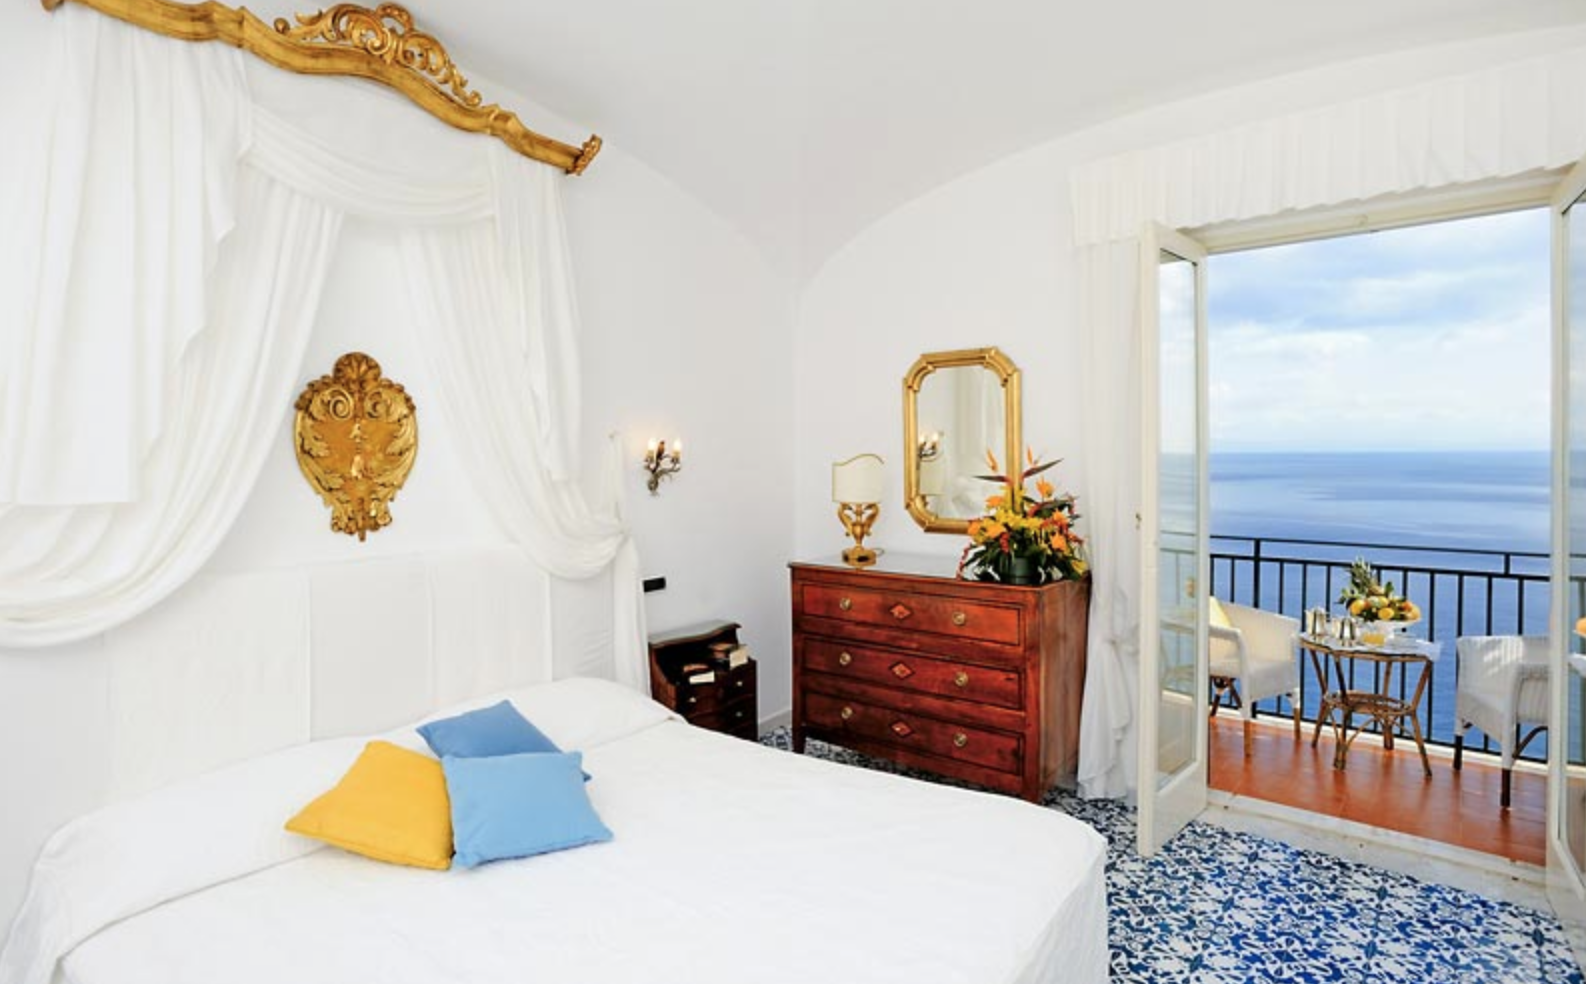 Amalfi Coast Hotels | Santa Caterina